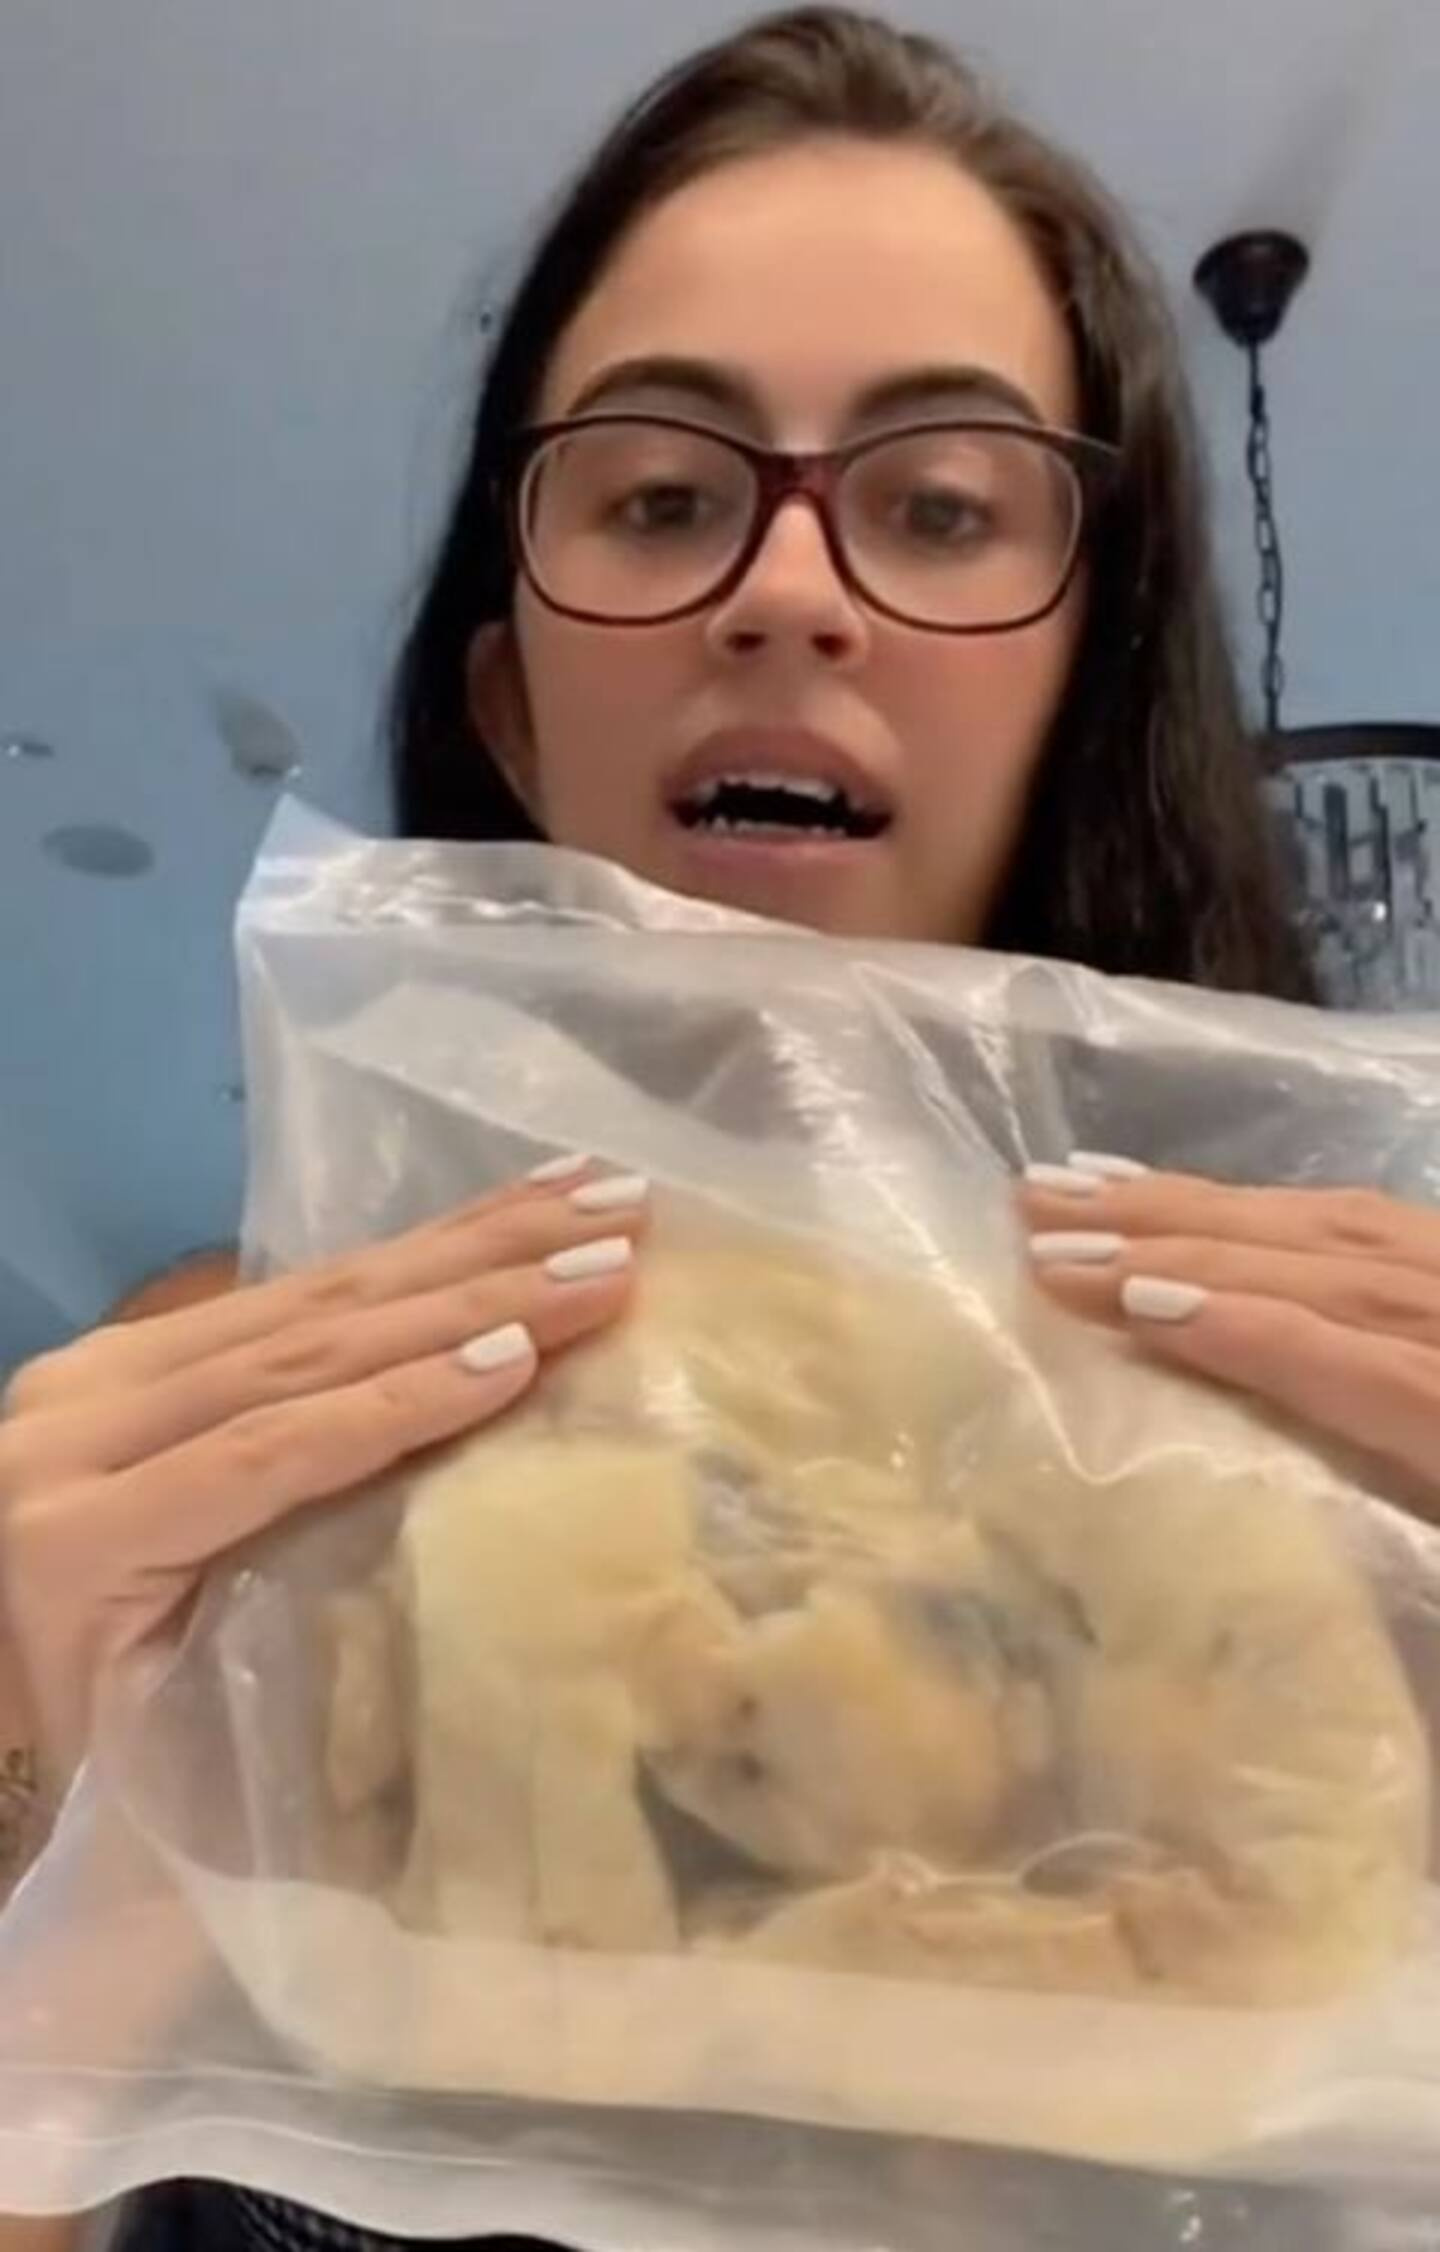 She shares her heart that looks like cookie dough on TikTok